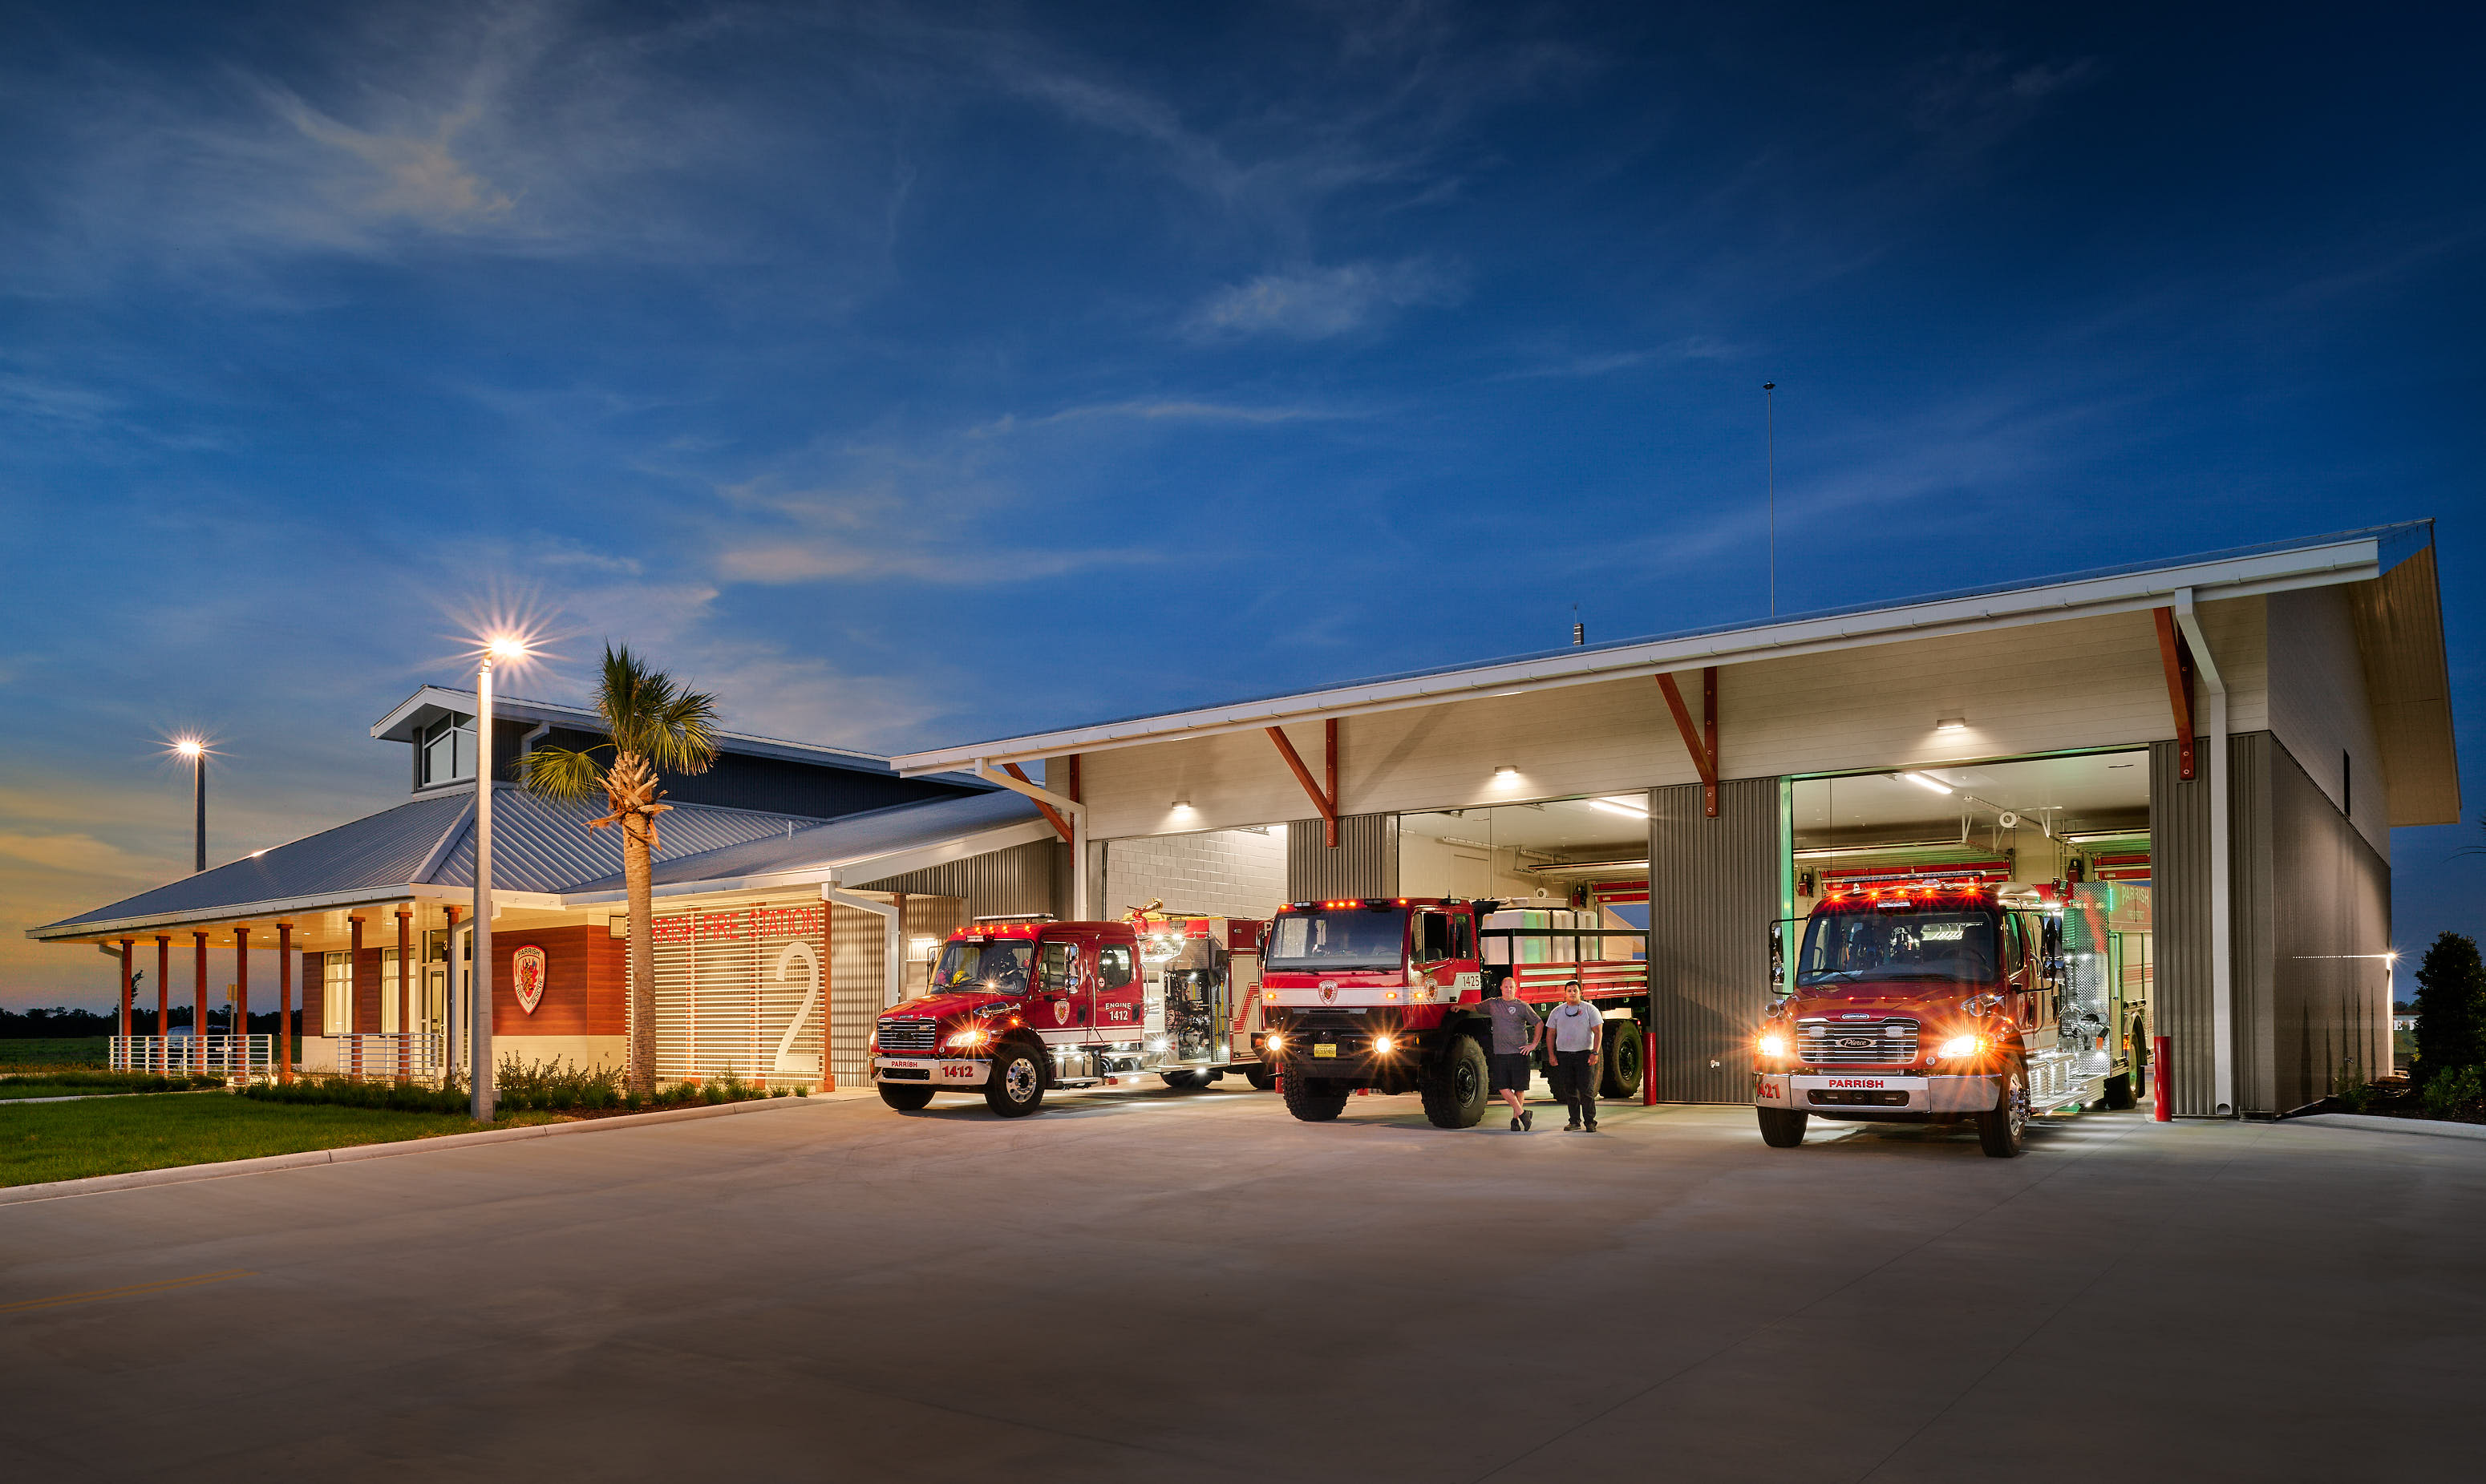 Parrish-FireHouse-Fire-Station-Twilight-Fire-Trucks